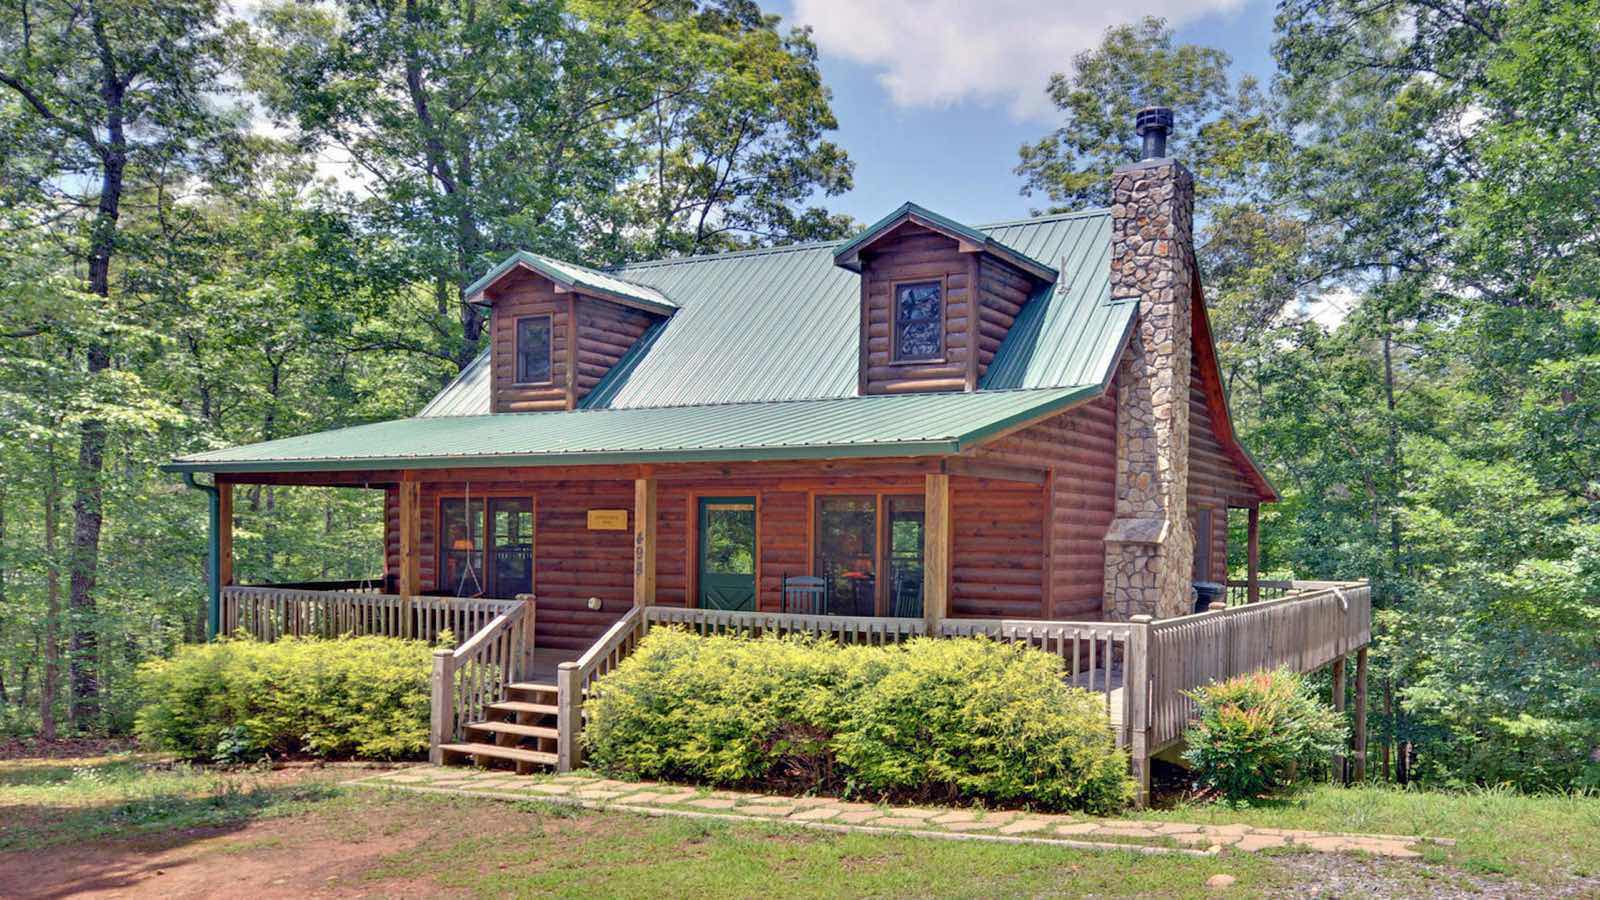 North Georgia Mountain Cabin Rentals